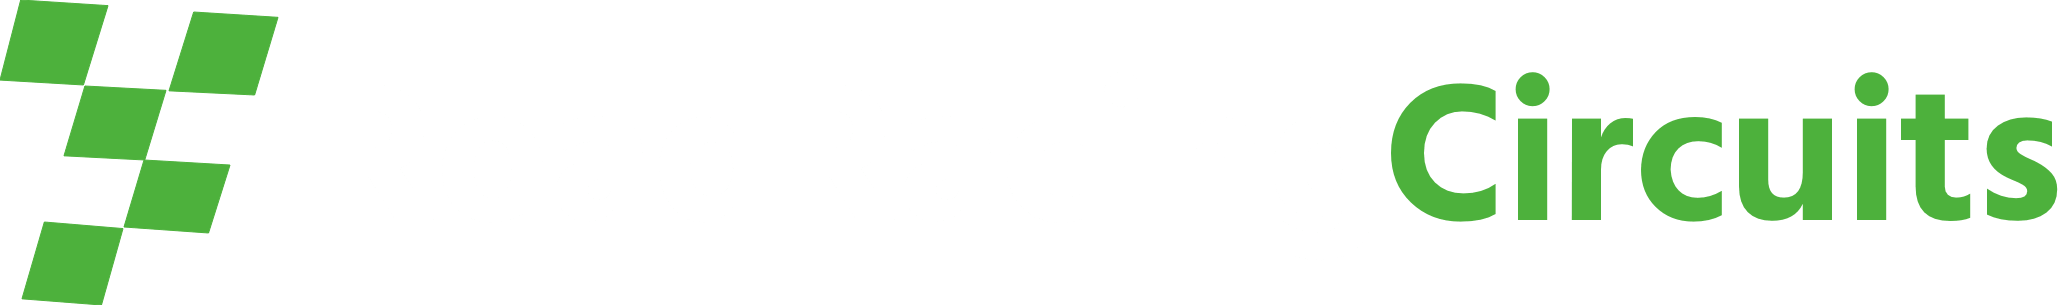 RoadRacingCircuits.com full logo